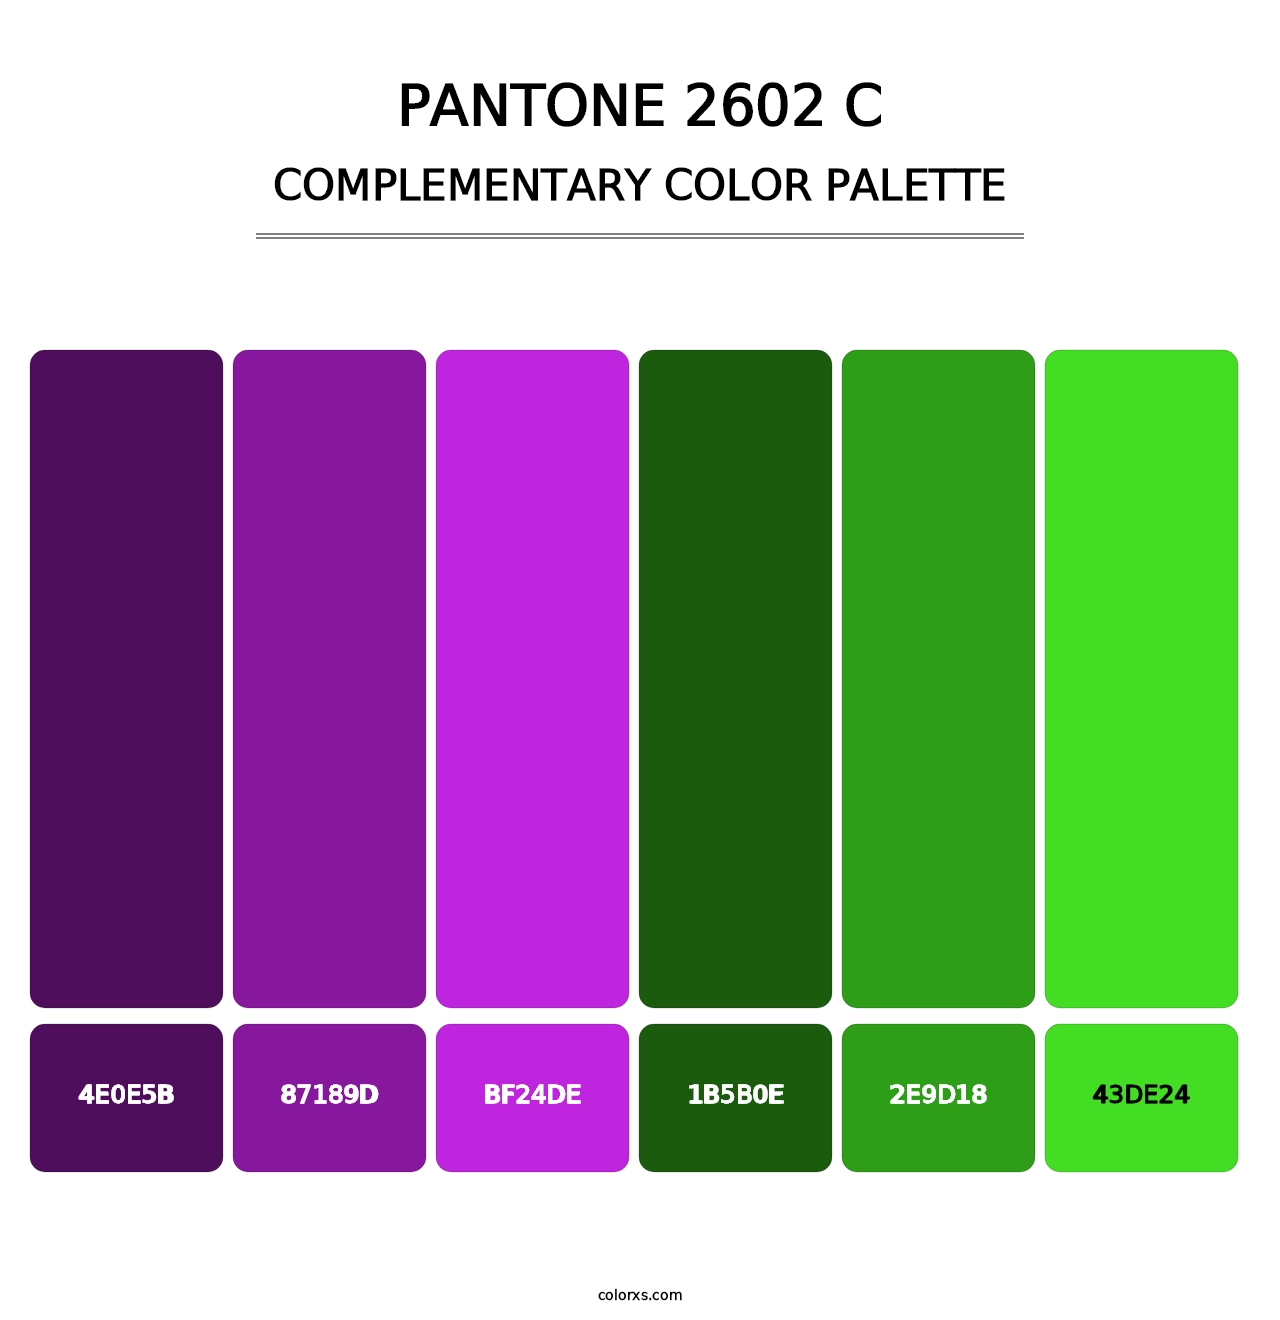 PANTONE 2602 C - Complementary Color Palette